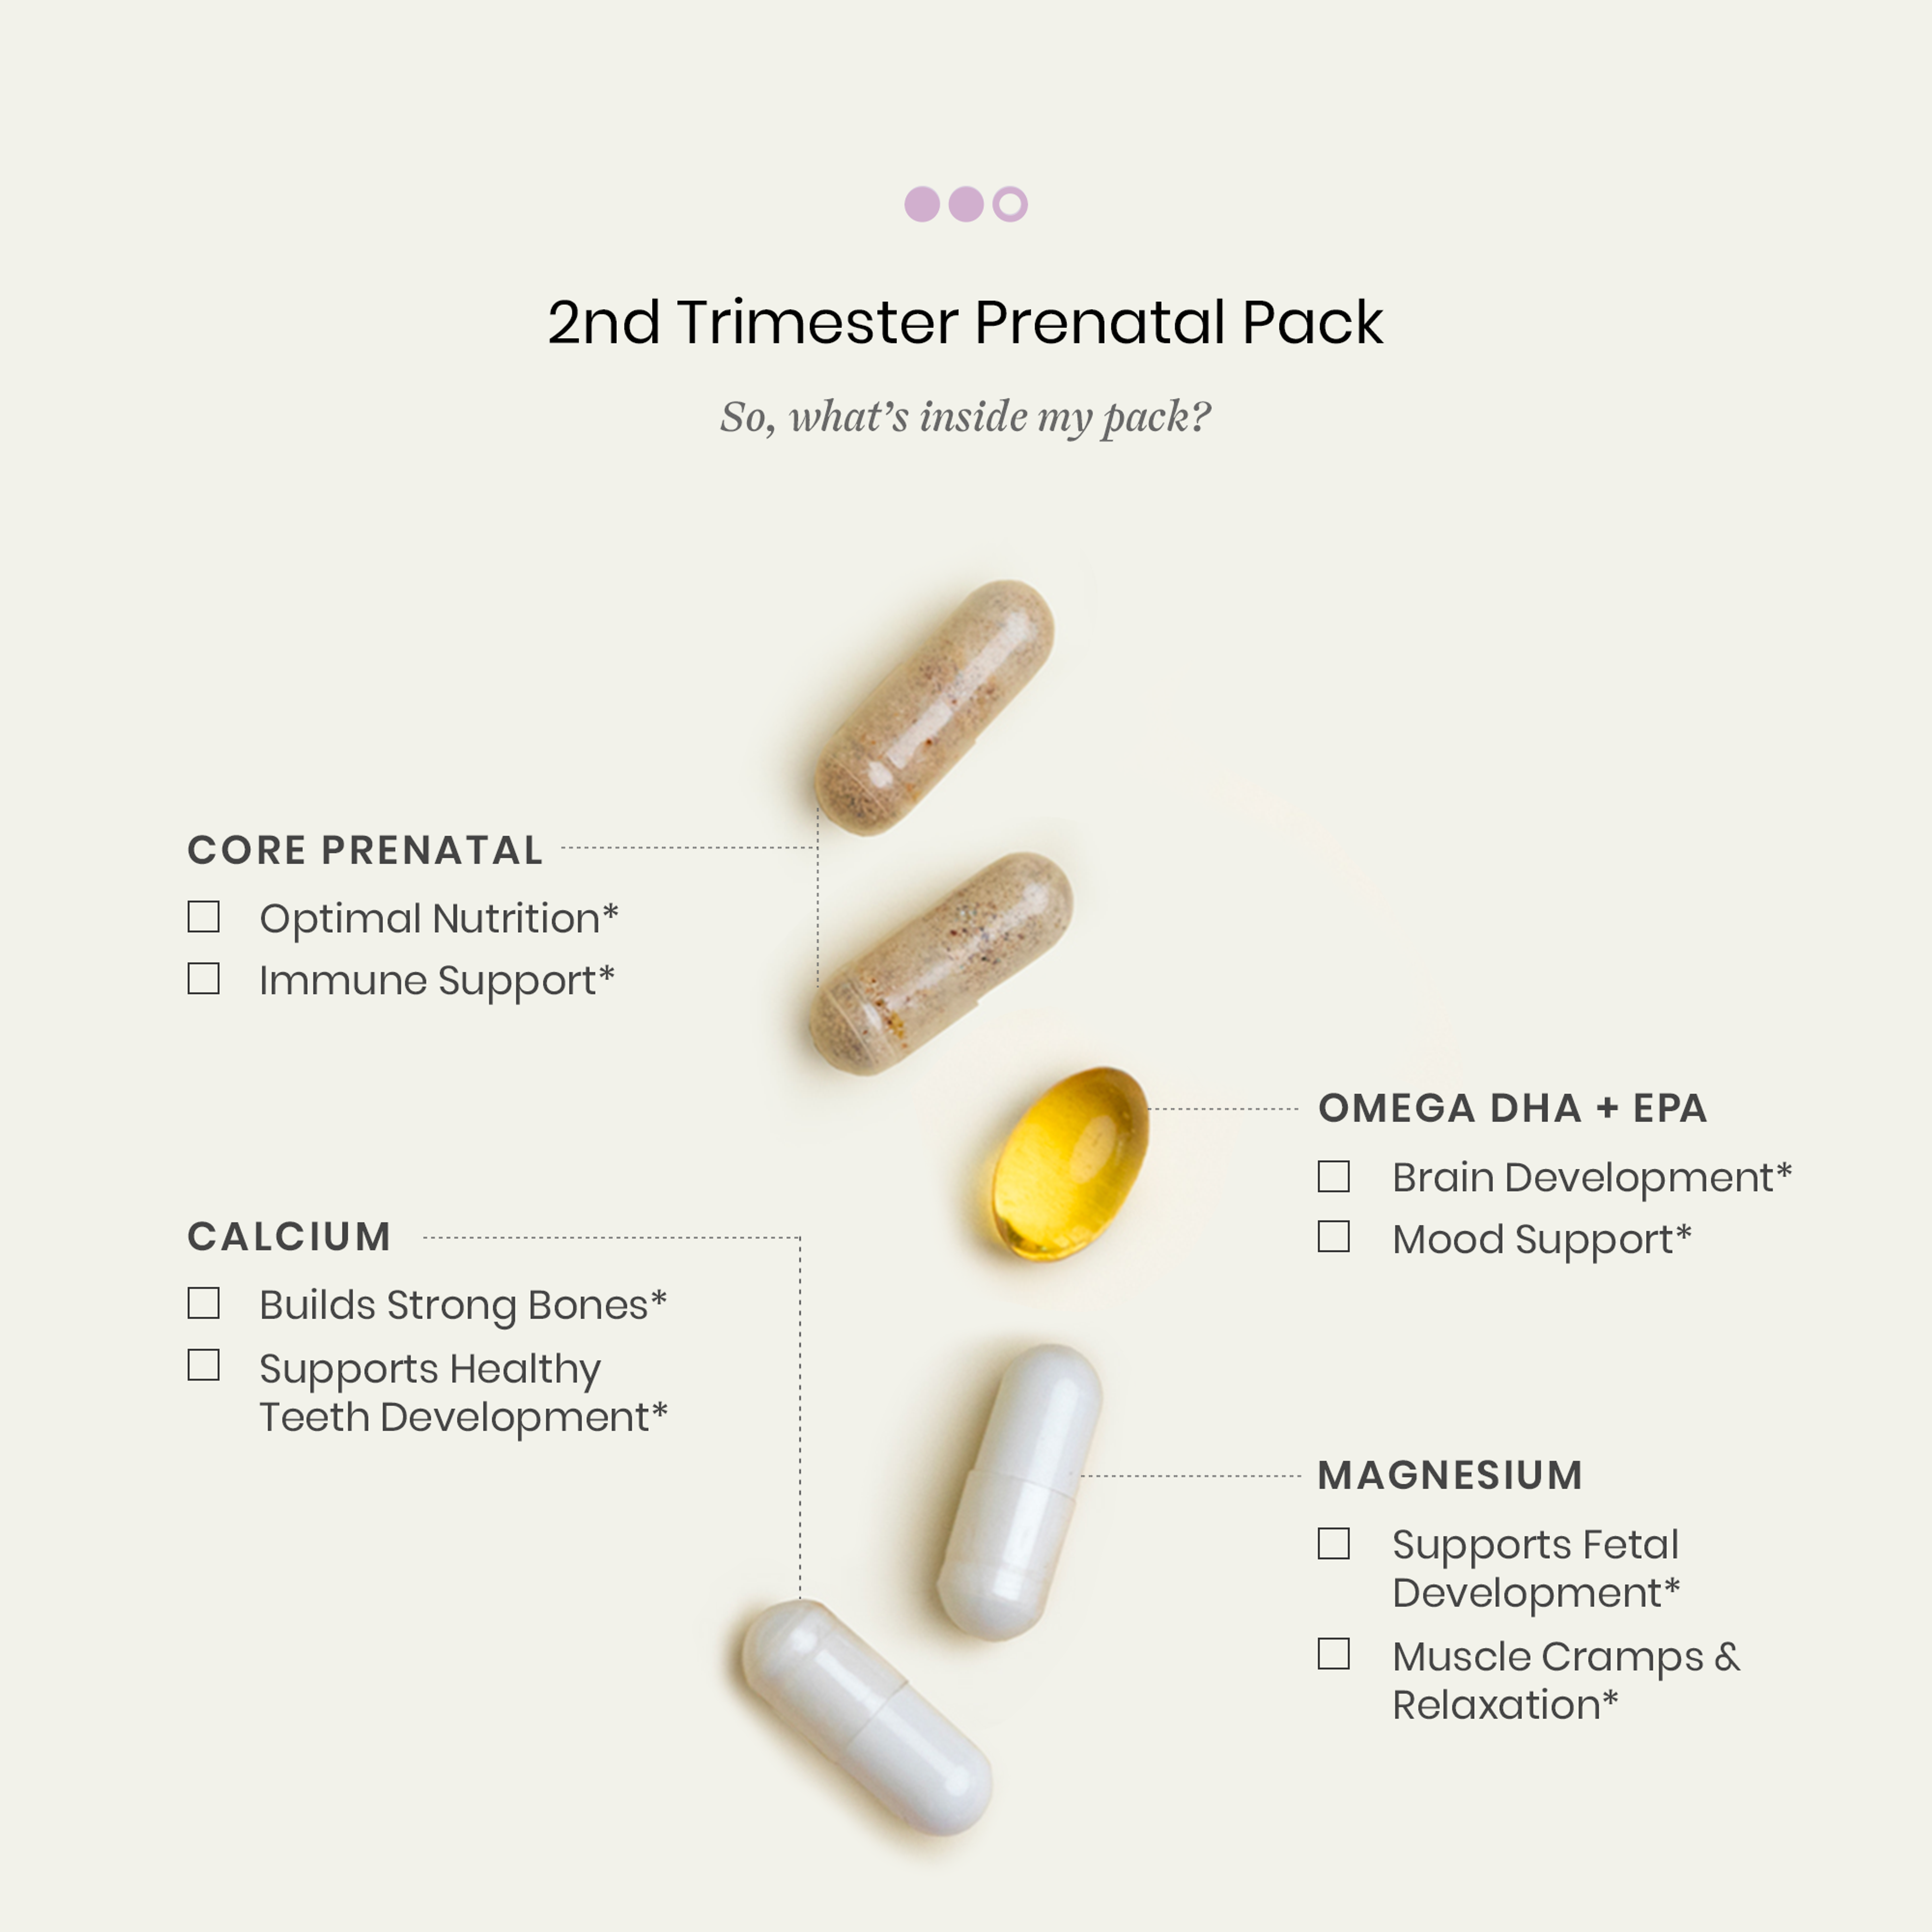 2nd Trimester Prenatal Pack